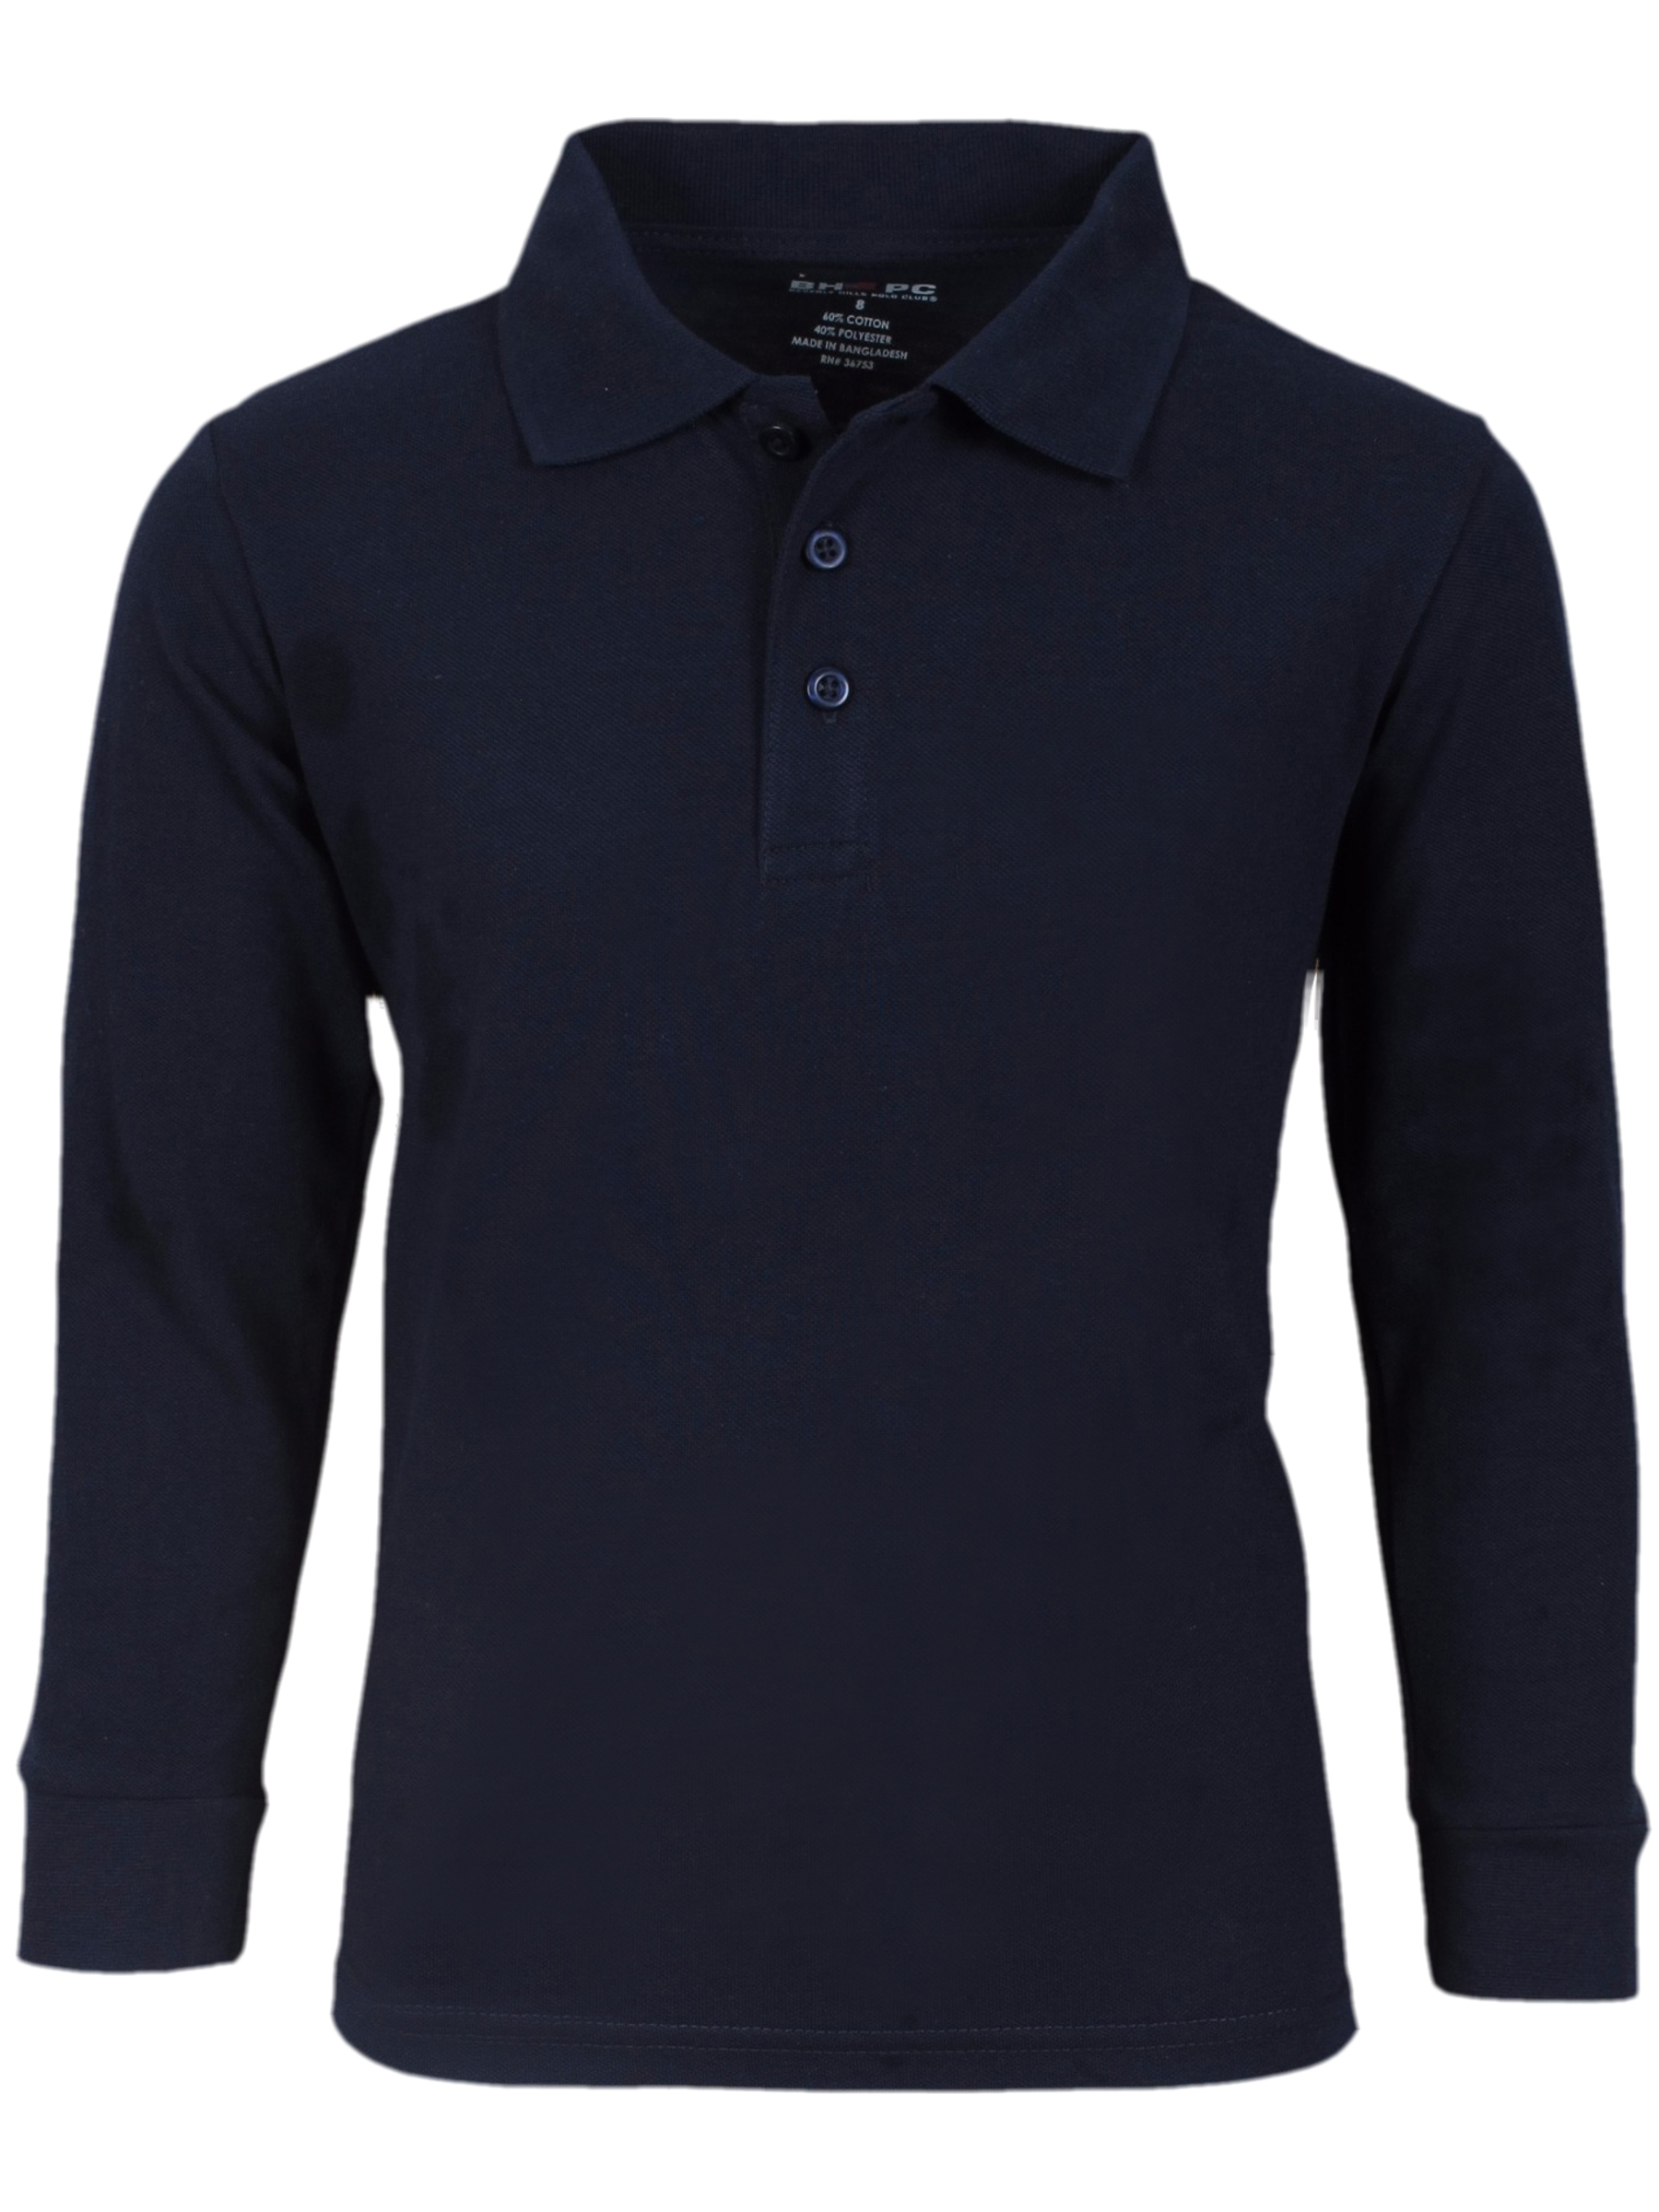 Beverly Hills Polo Club Boys 4-14 School Uniform 2 Pack Long Sleeve Pique Polo Shirt - image 2 of 2